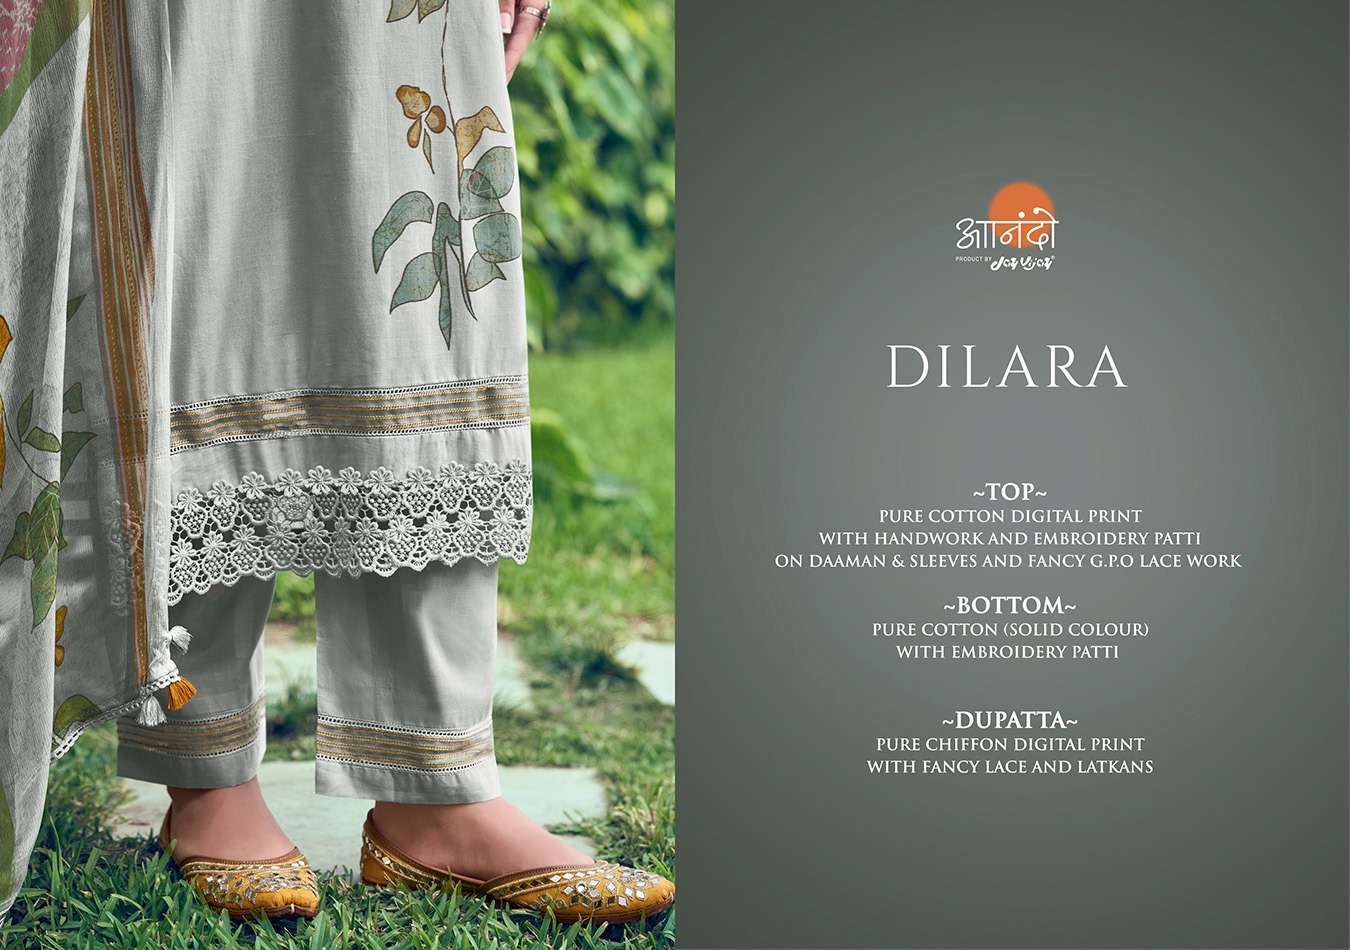 jayvijay dilara 3077 series fancy designer dress material catalogue online dealer surat